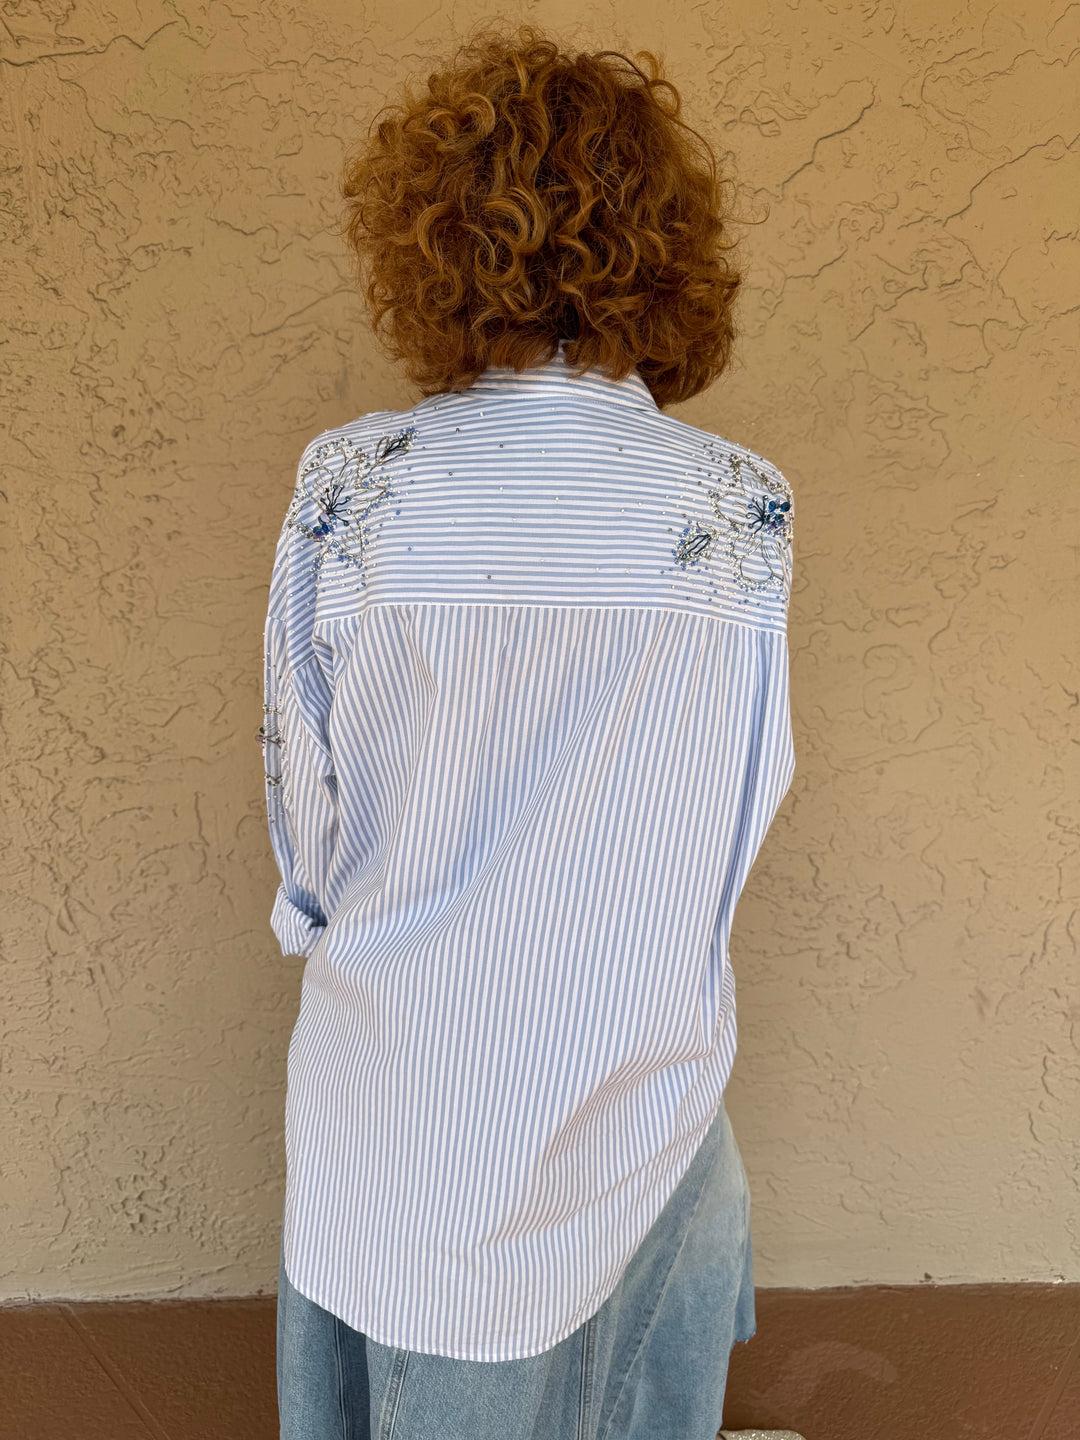 Essentiel Antwerp Ferret Blue & White Stripe Shirt With Embellishments - Back View